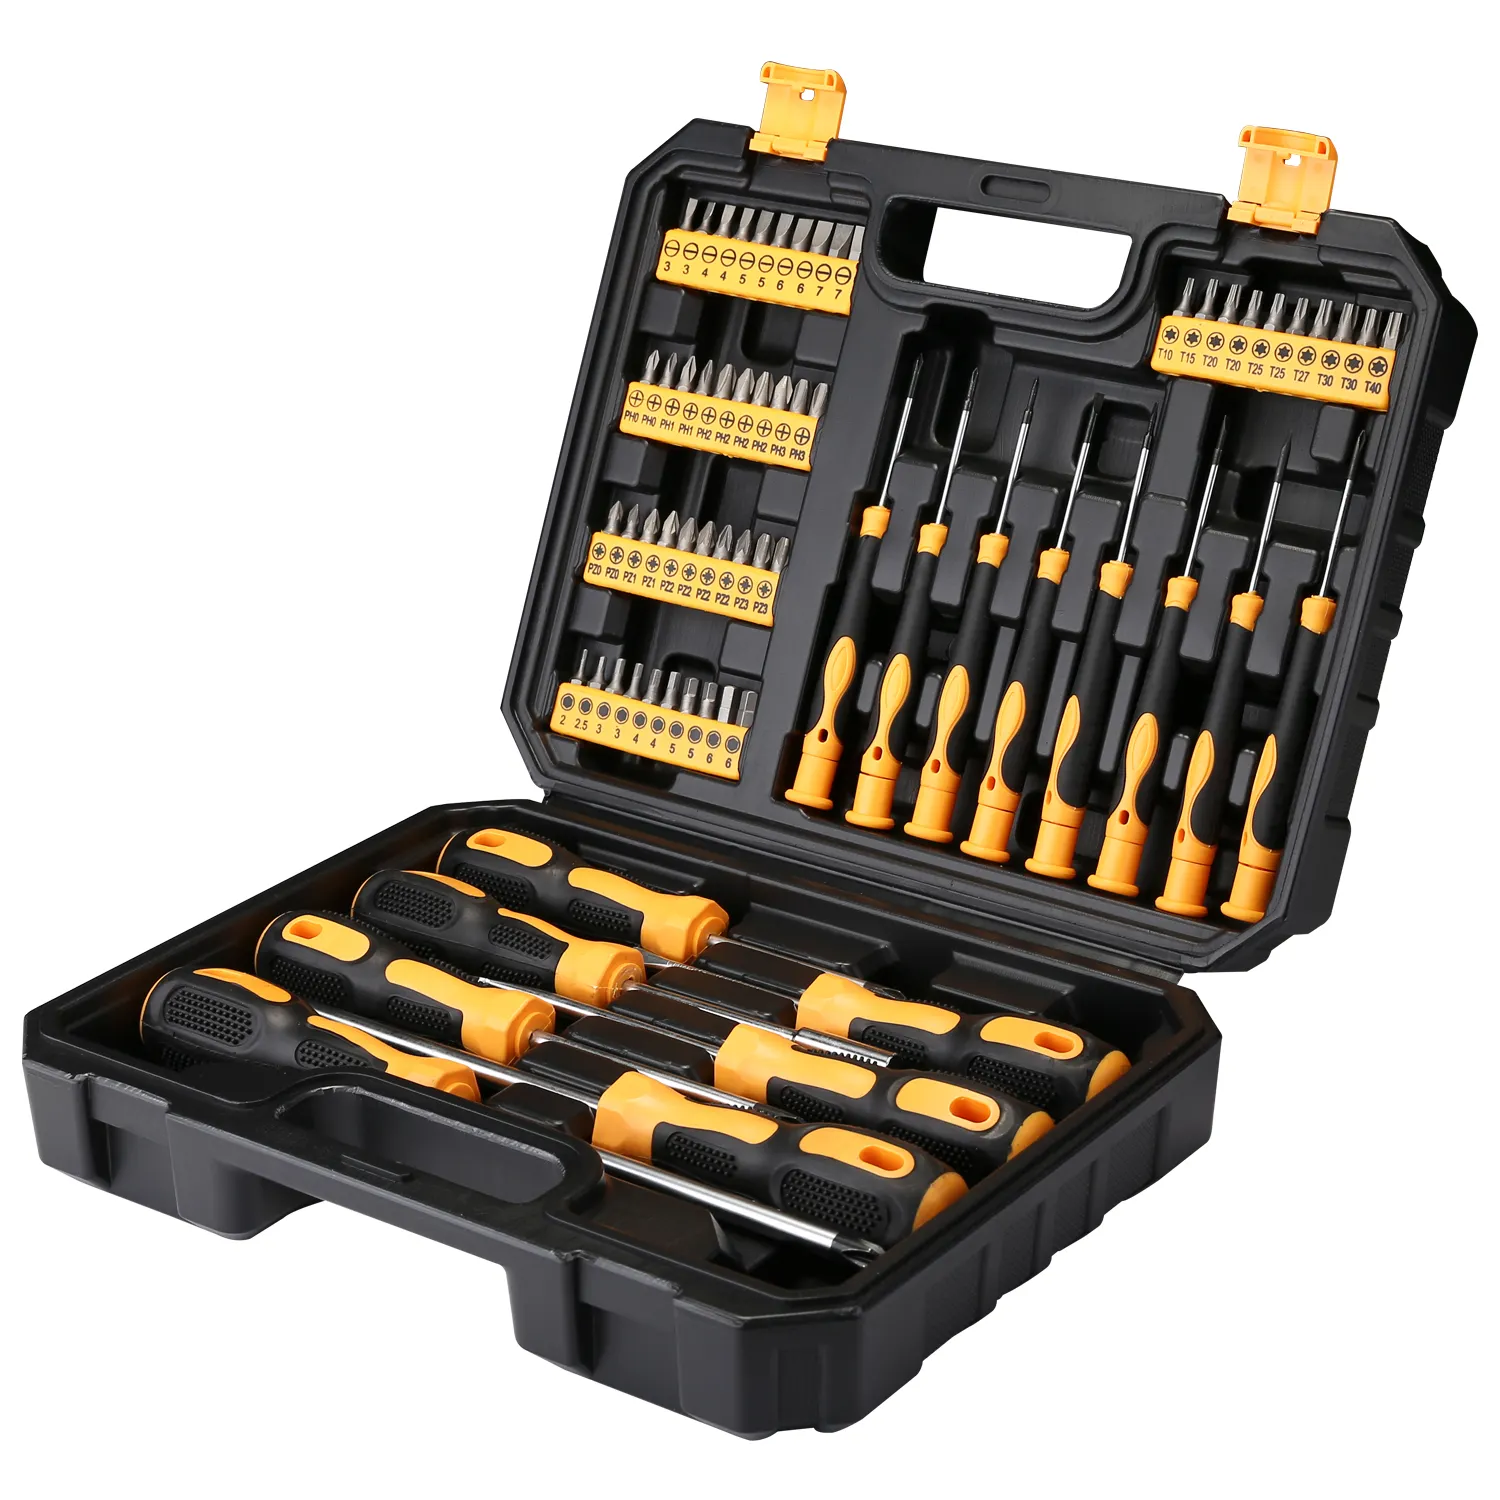 DEKO DKMT65 Repair Kits Box Insulated Screwdriver Tool Set For Household Appliance Repairing 65pcs Screw Bit Set